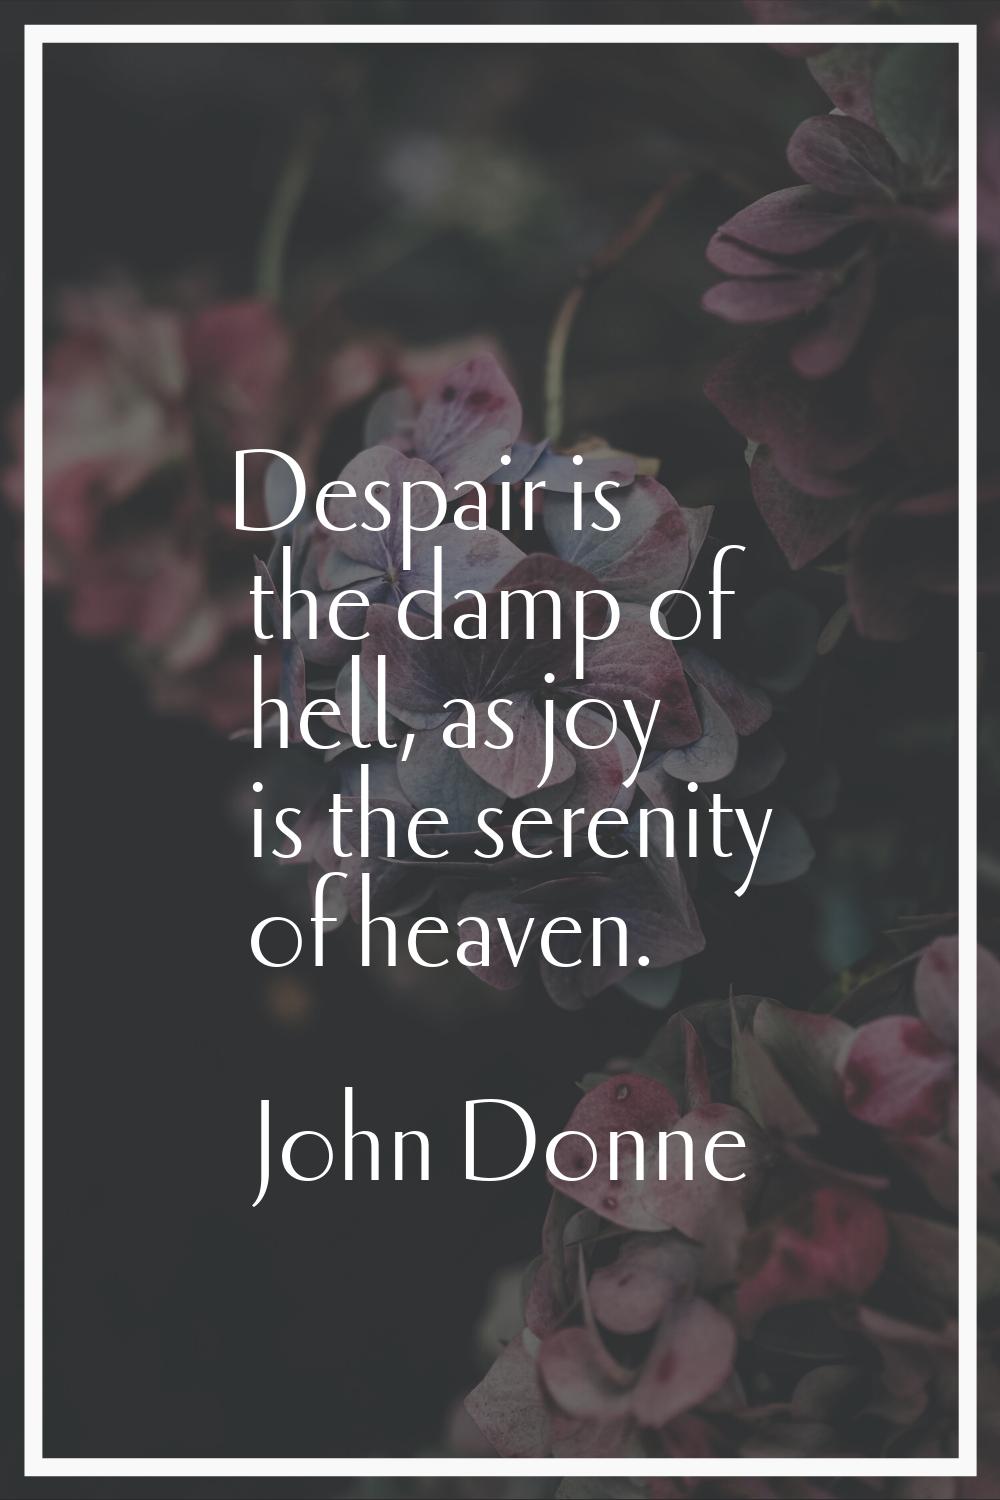 Despair is the damp of hell, as joy is the serenity of heaven.